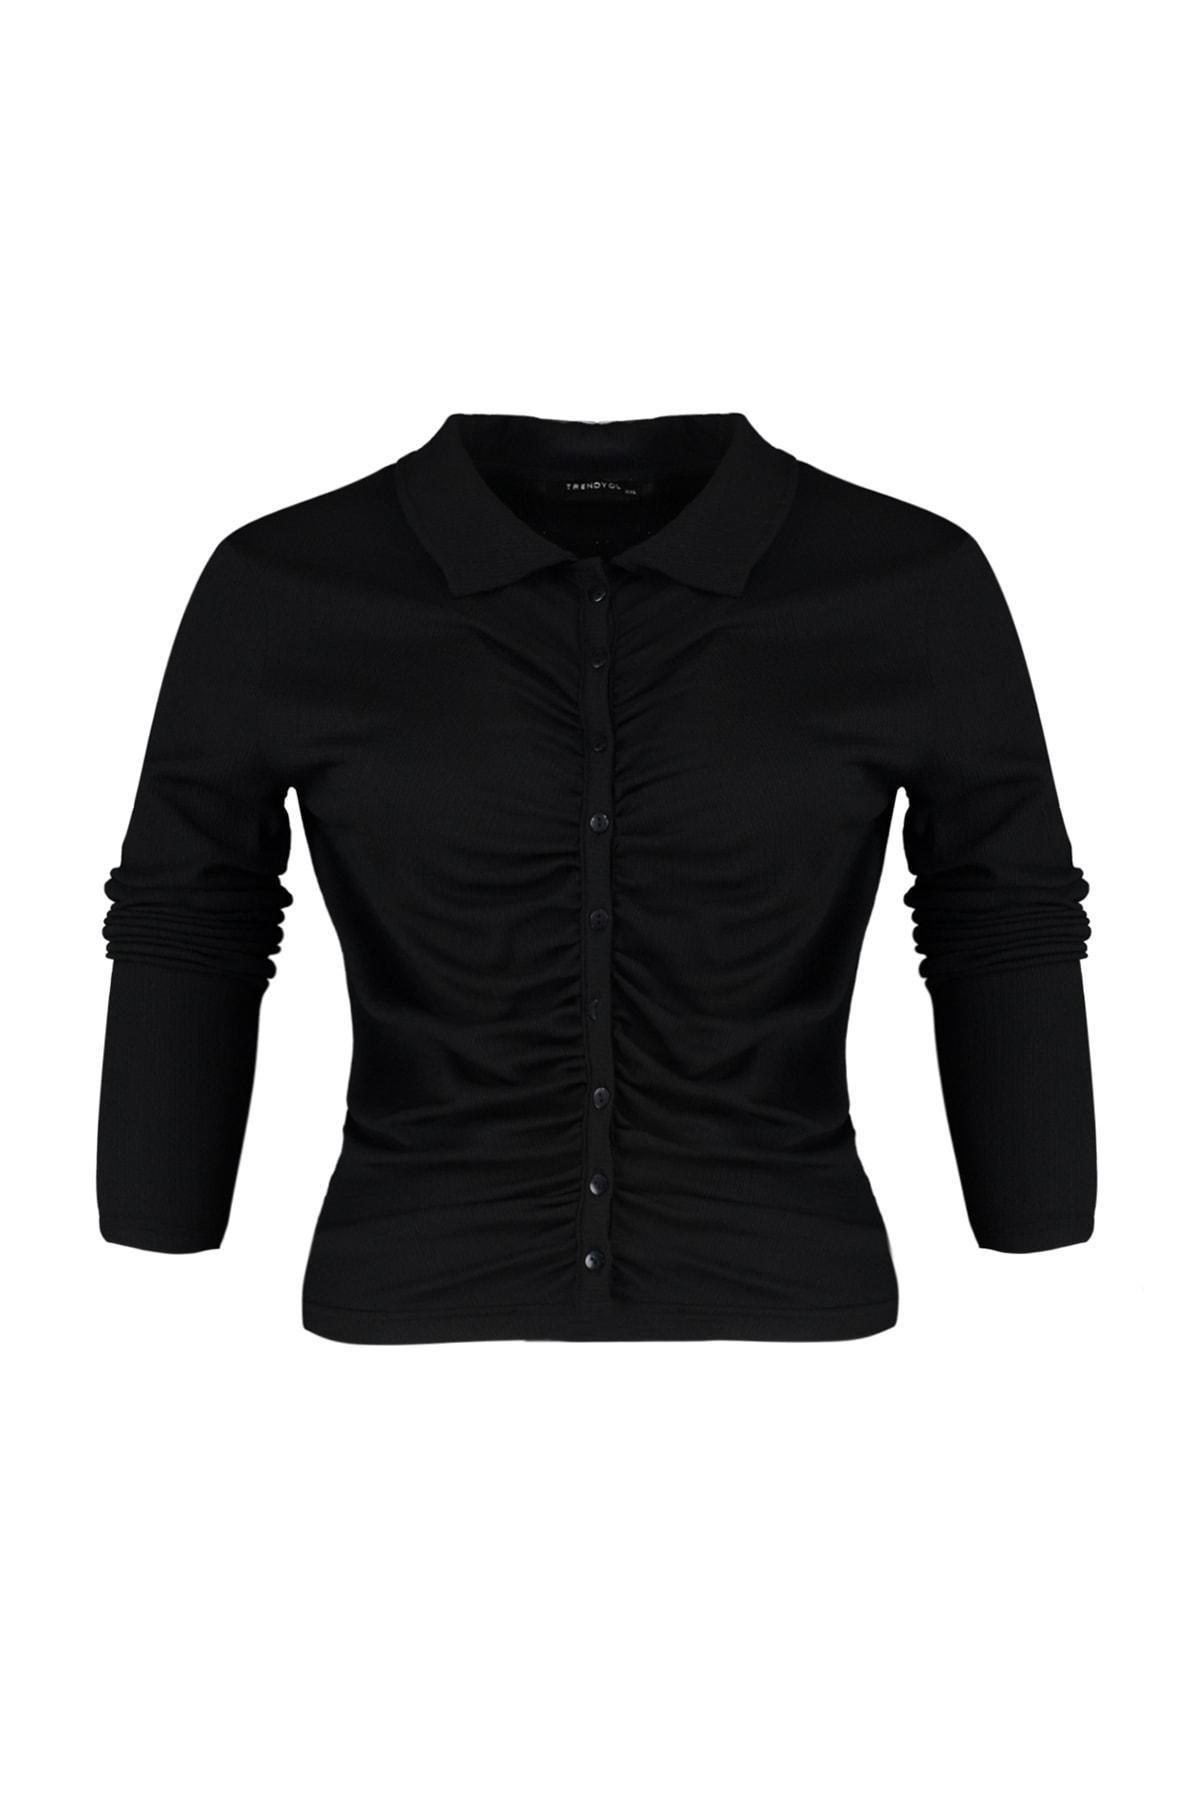 Trendyol - Black Long Sleeve Plus Size Blouse<br>